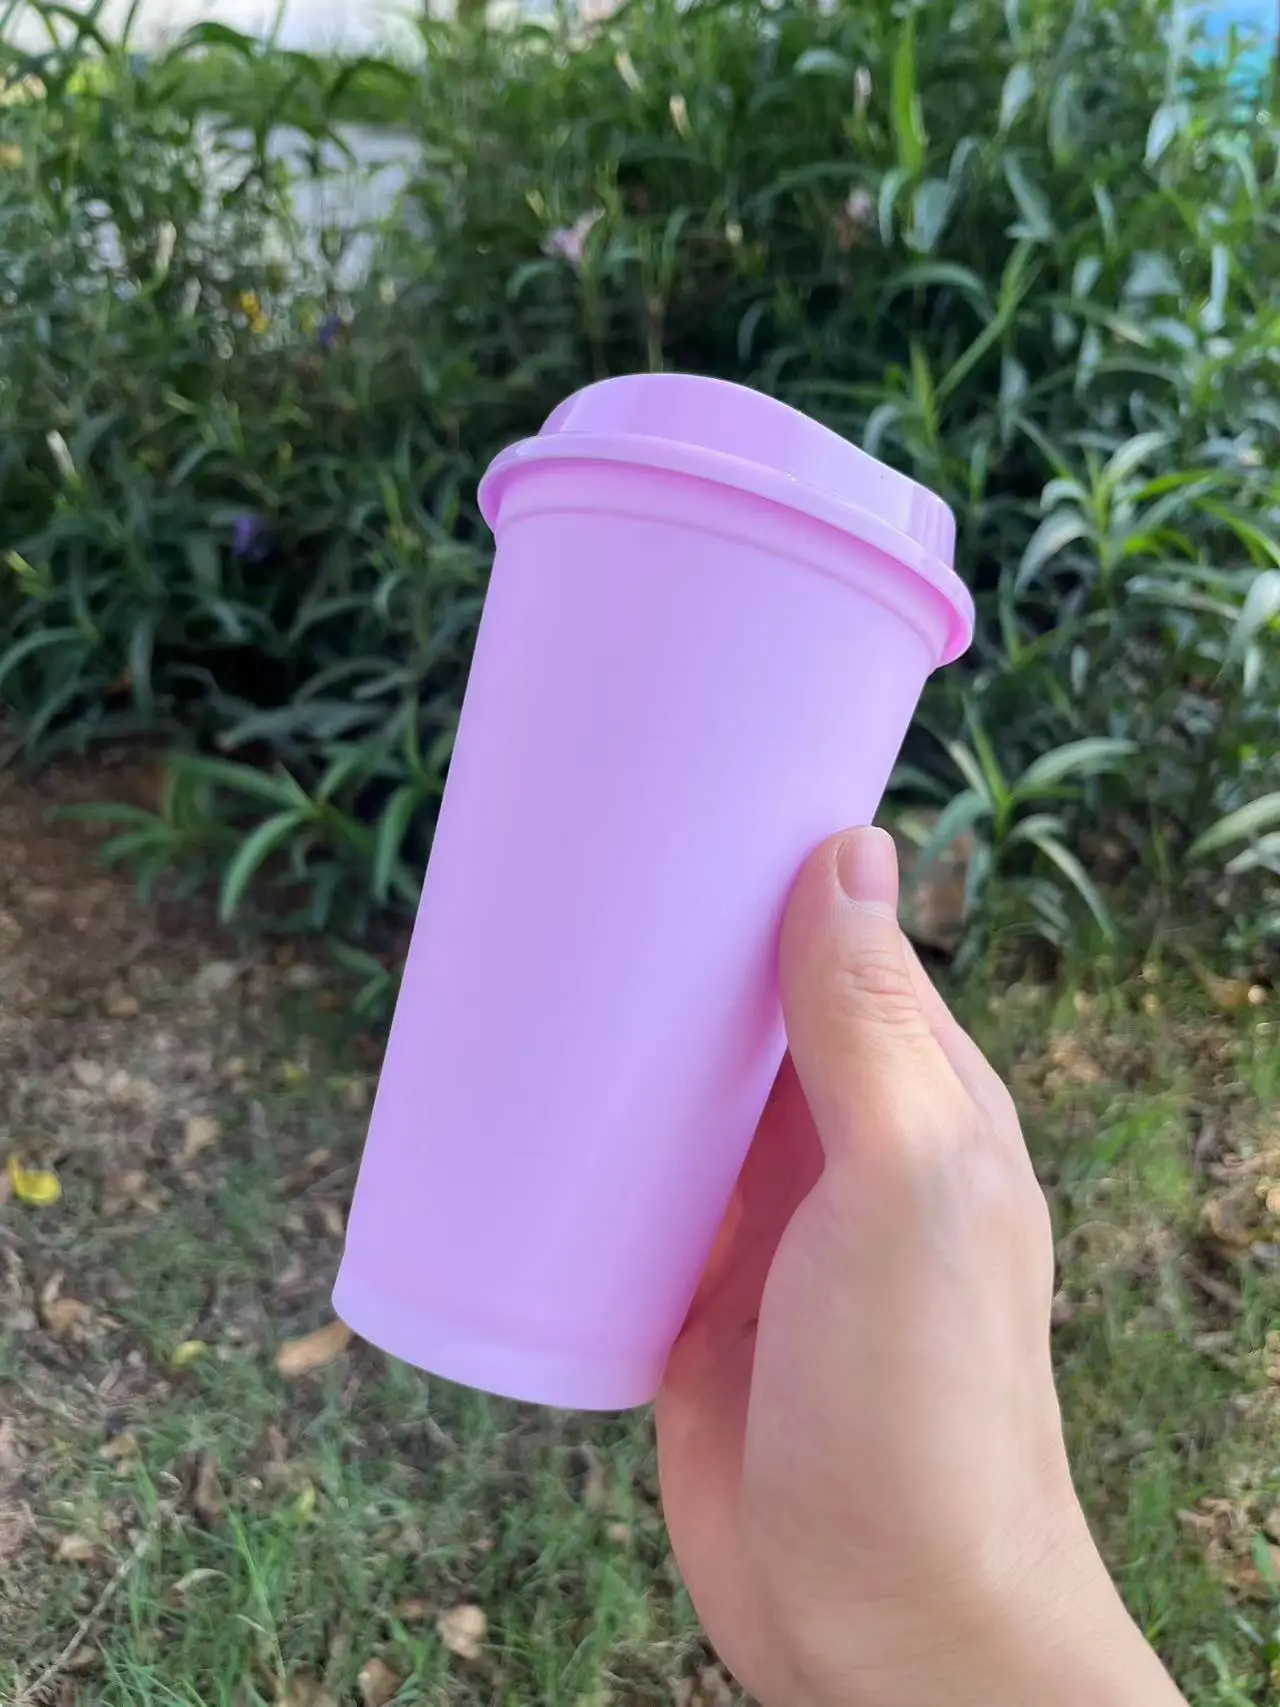 360/480ml Eco-Friendly PP Coffee Mug Travel Mug With Lid Portable Beer Mugs  Tea Cups Milk Cup for Christmas Lover Gifts